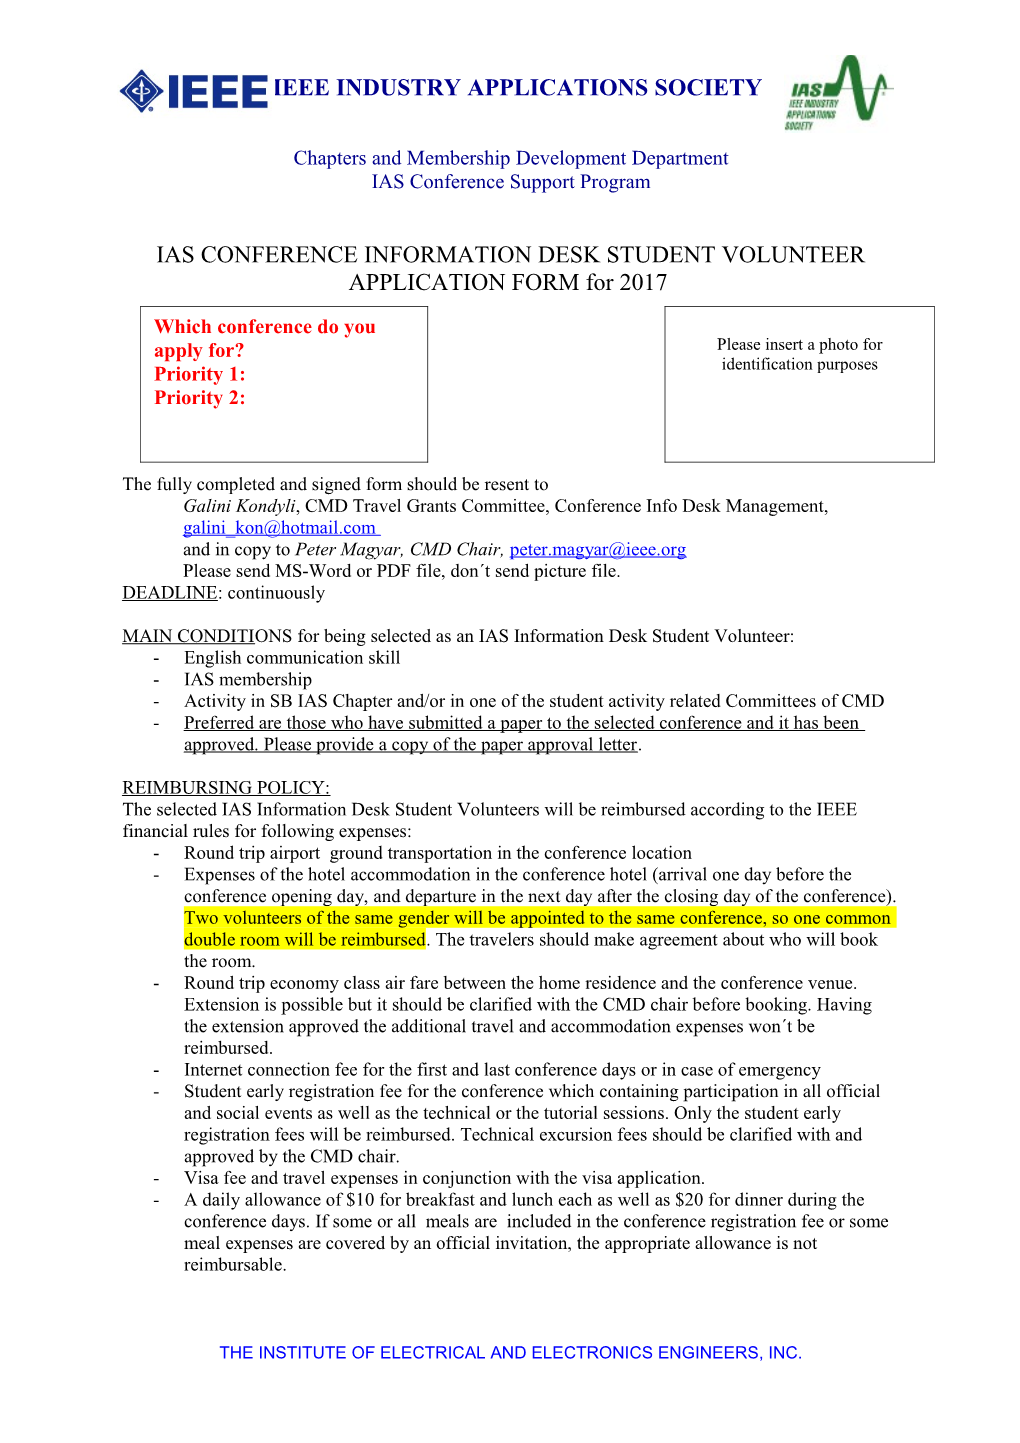 P. Magyar / IAS Conf Info Desk Student Volunteer Application Form